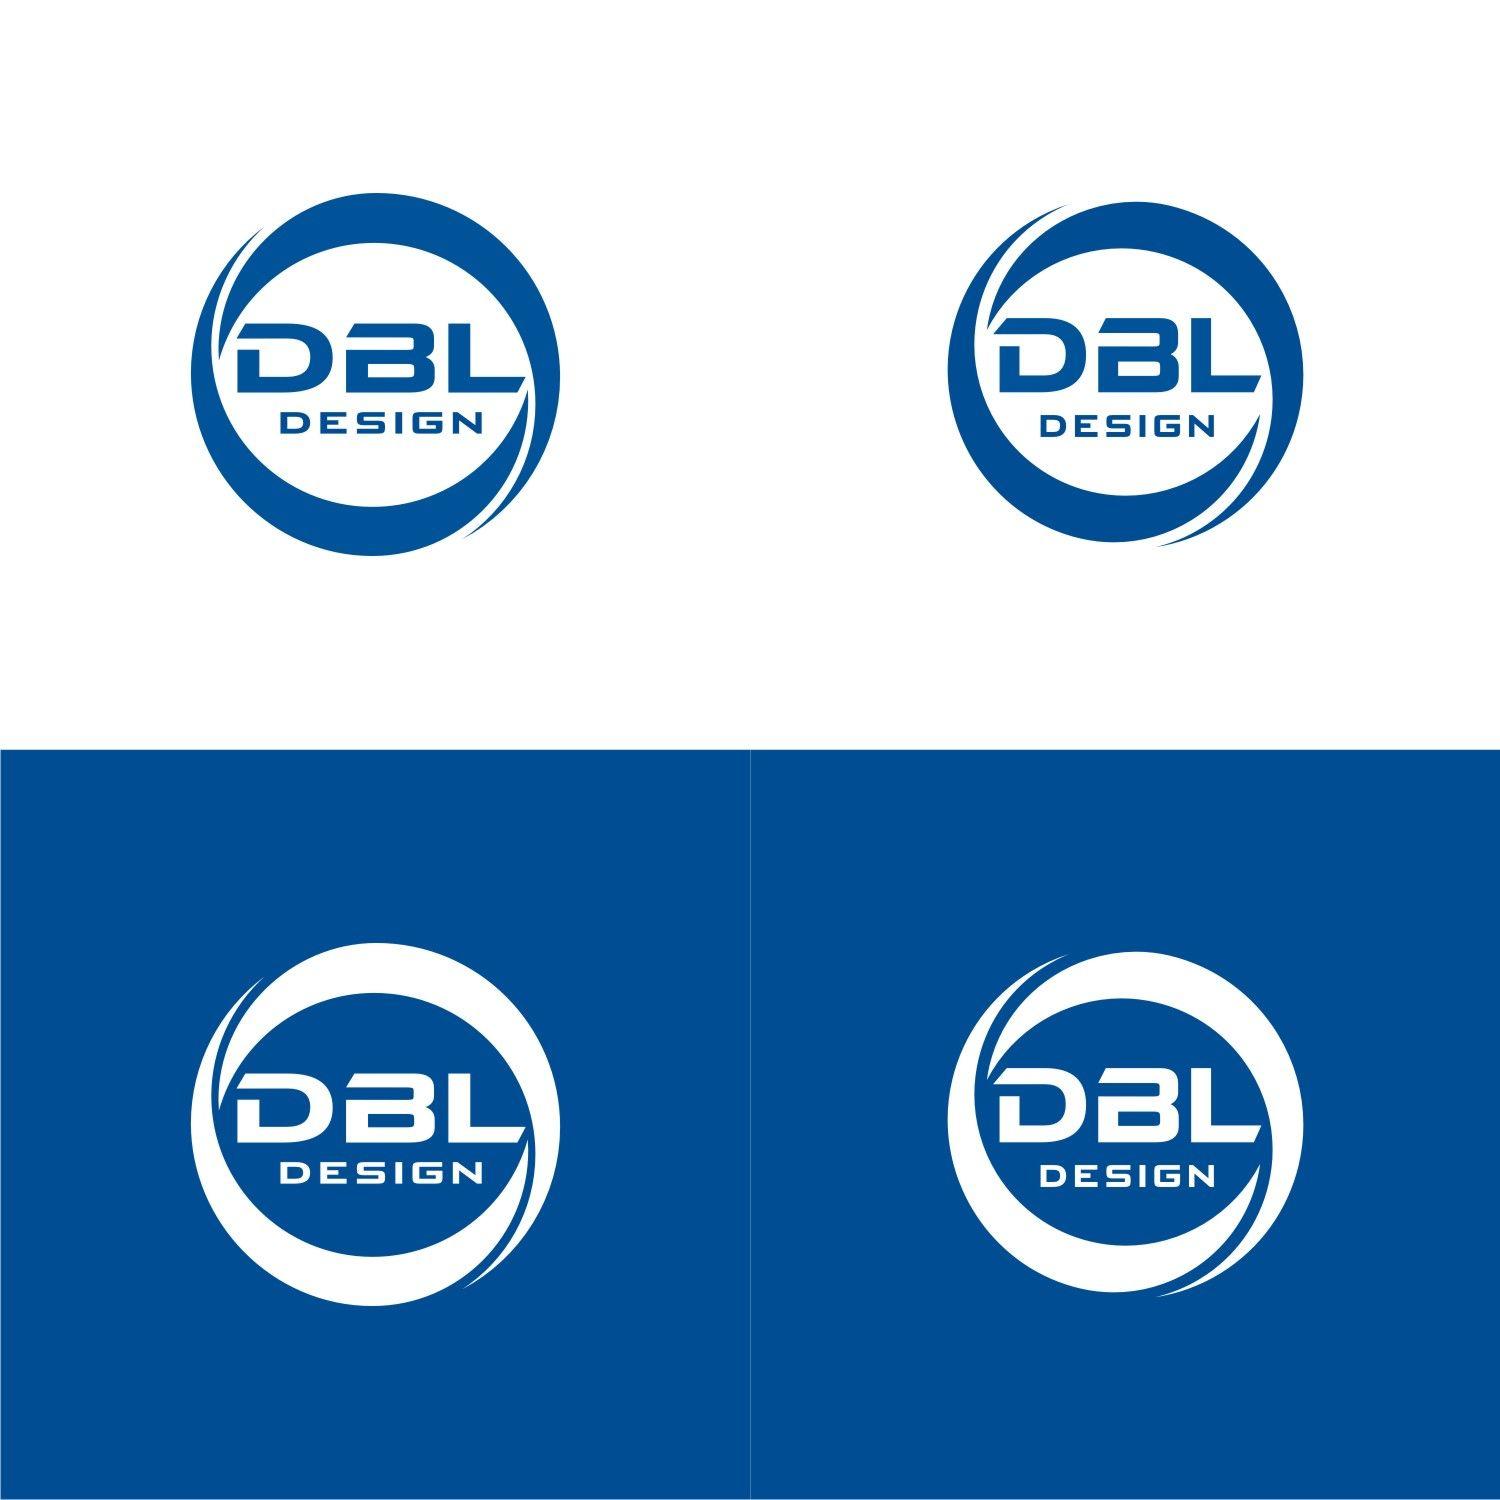 Dbl Logo - Masculine, Serious, Automotive Logo Design for DBL Design by ...